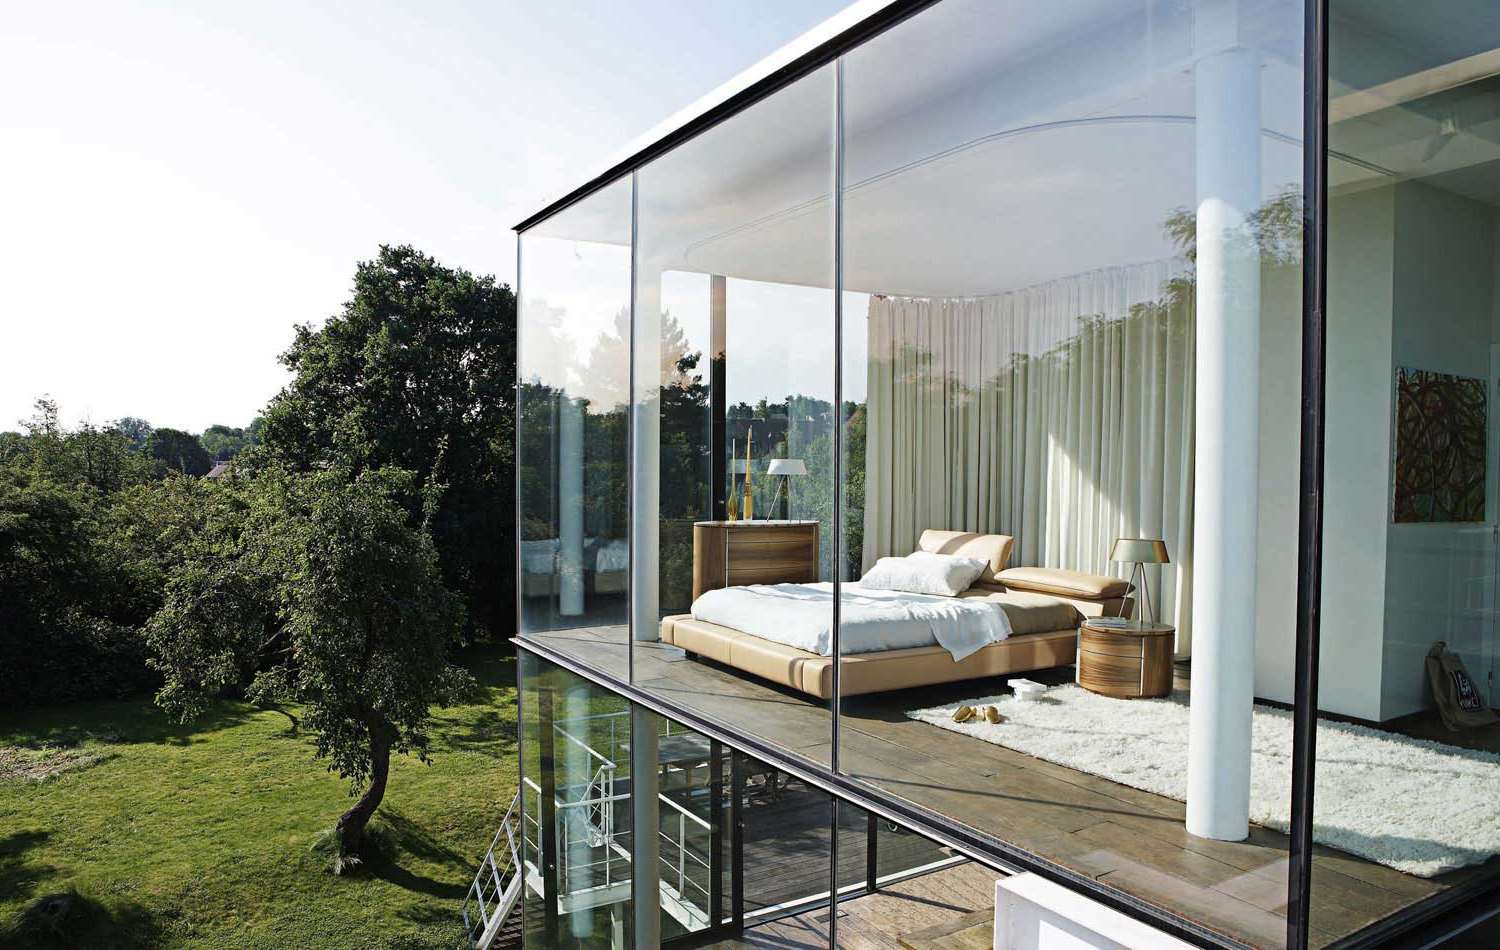 bedroom glass cool walls designs bed floor views open amazing night dream window windows ceiling through stunning